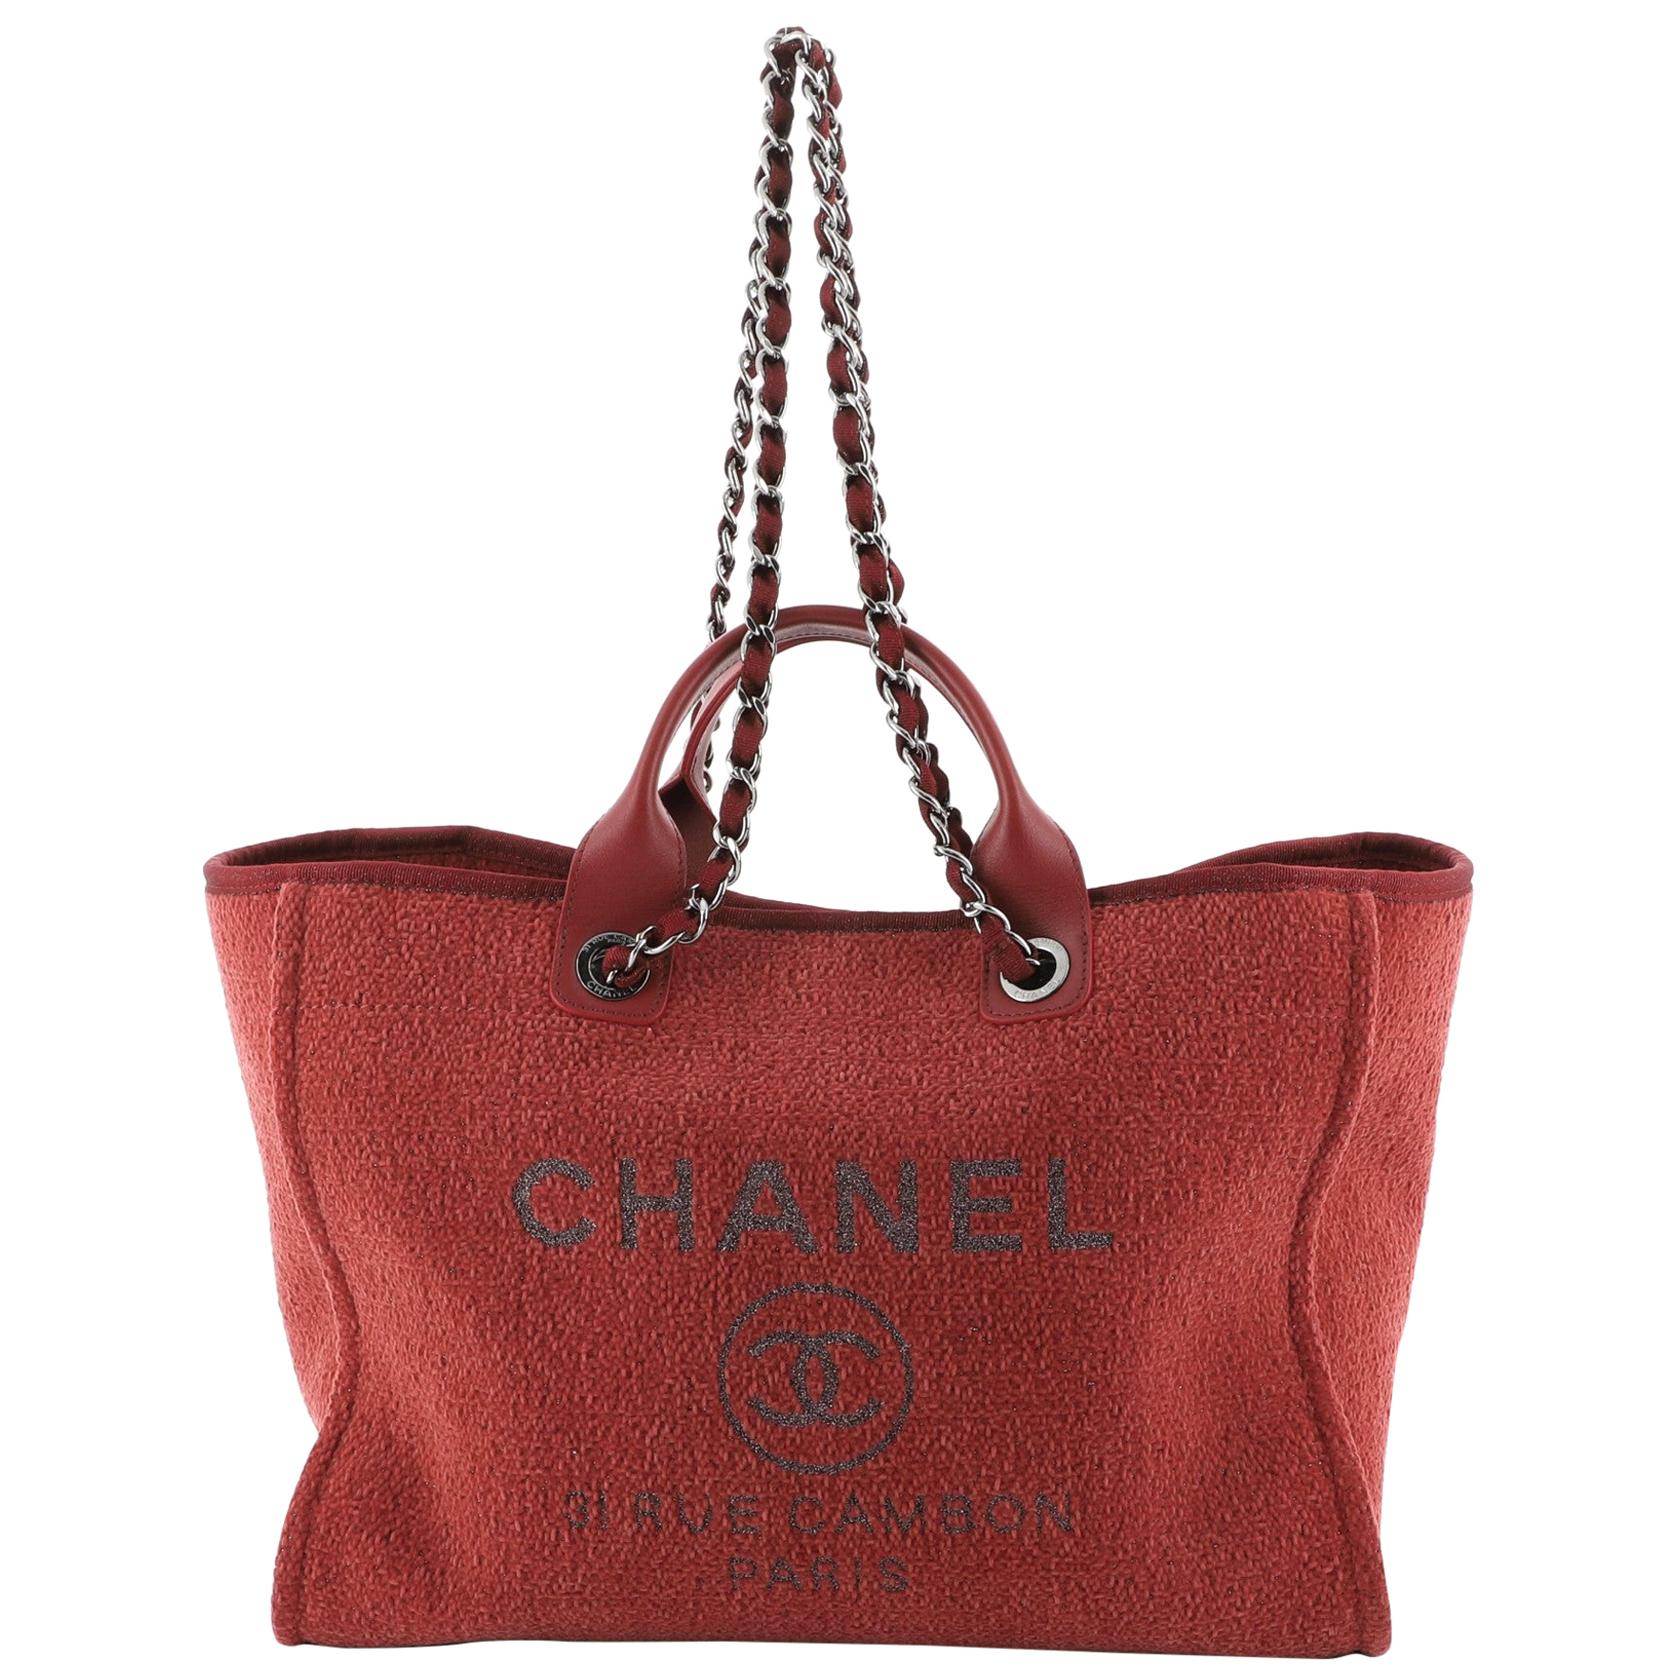 Chanel Deauville Tote Lurex Boucle Medium